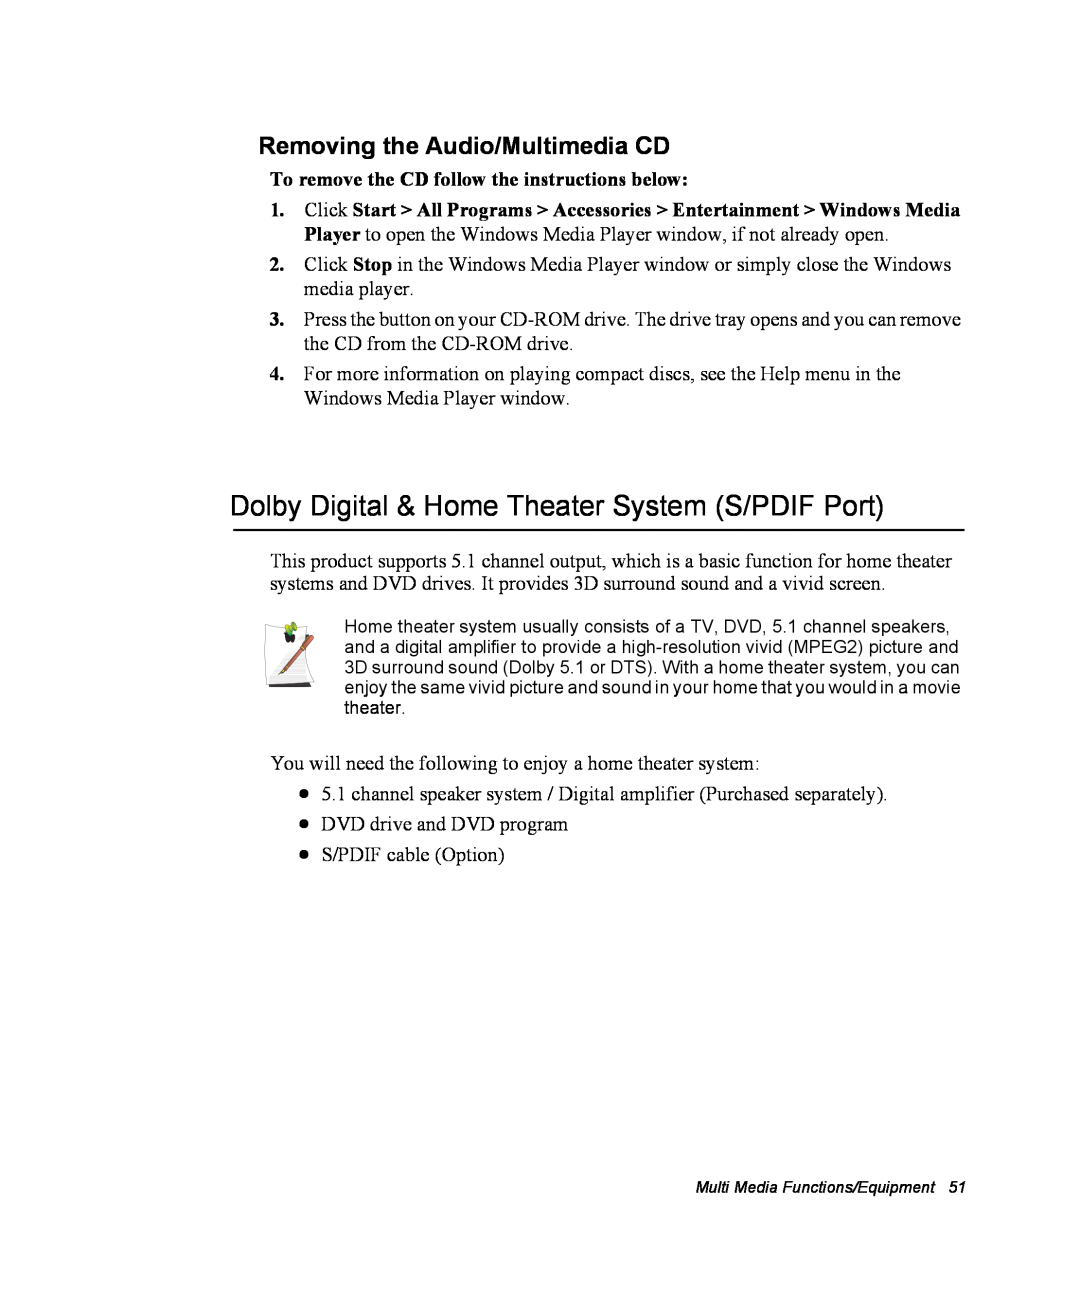 Samsung NX10PRTV04/SEG, EV-NX10ZZBABZA Dolby Digital & Home Theater System S/PDIF Port, Removing the Audio/Multimedia CD 